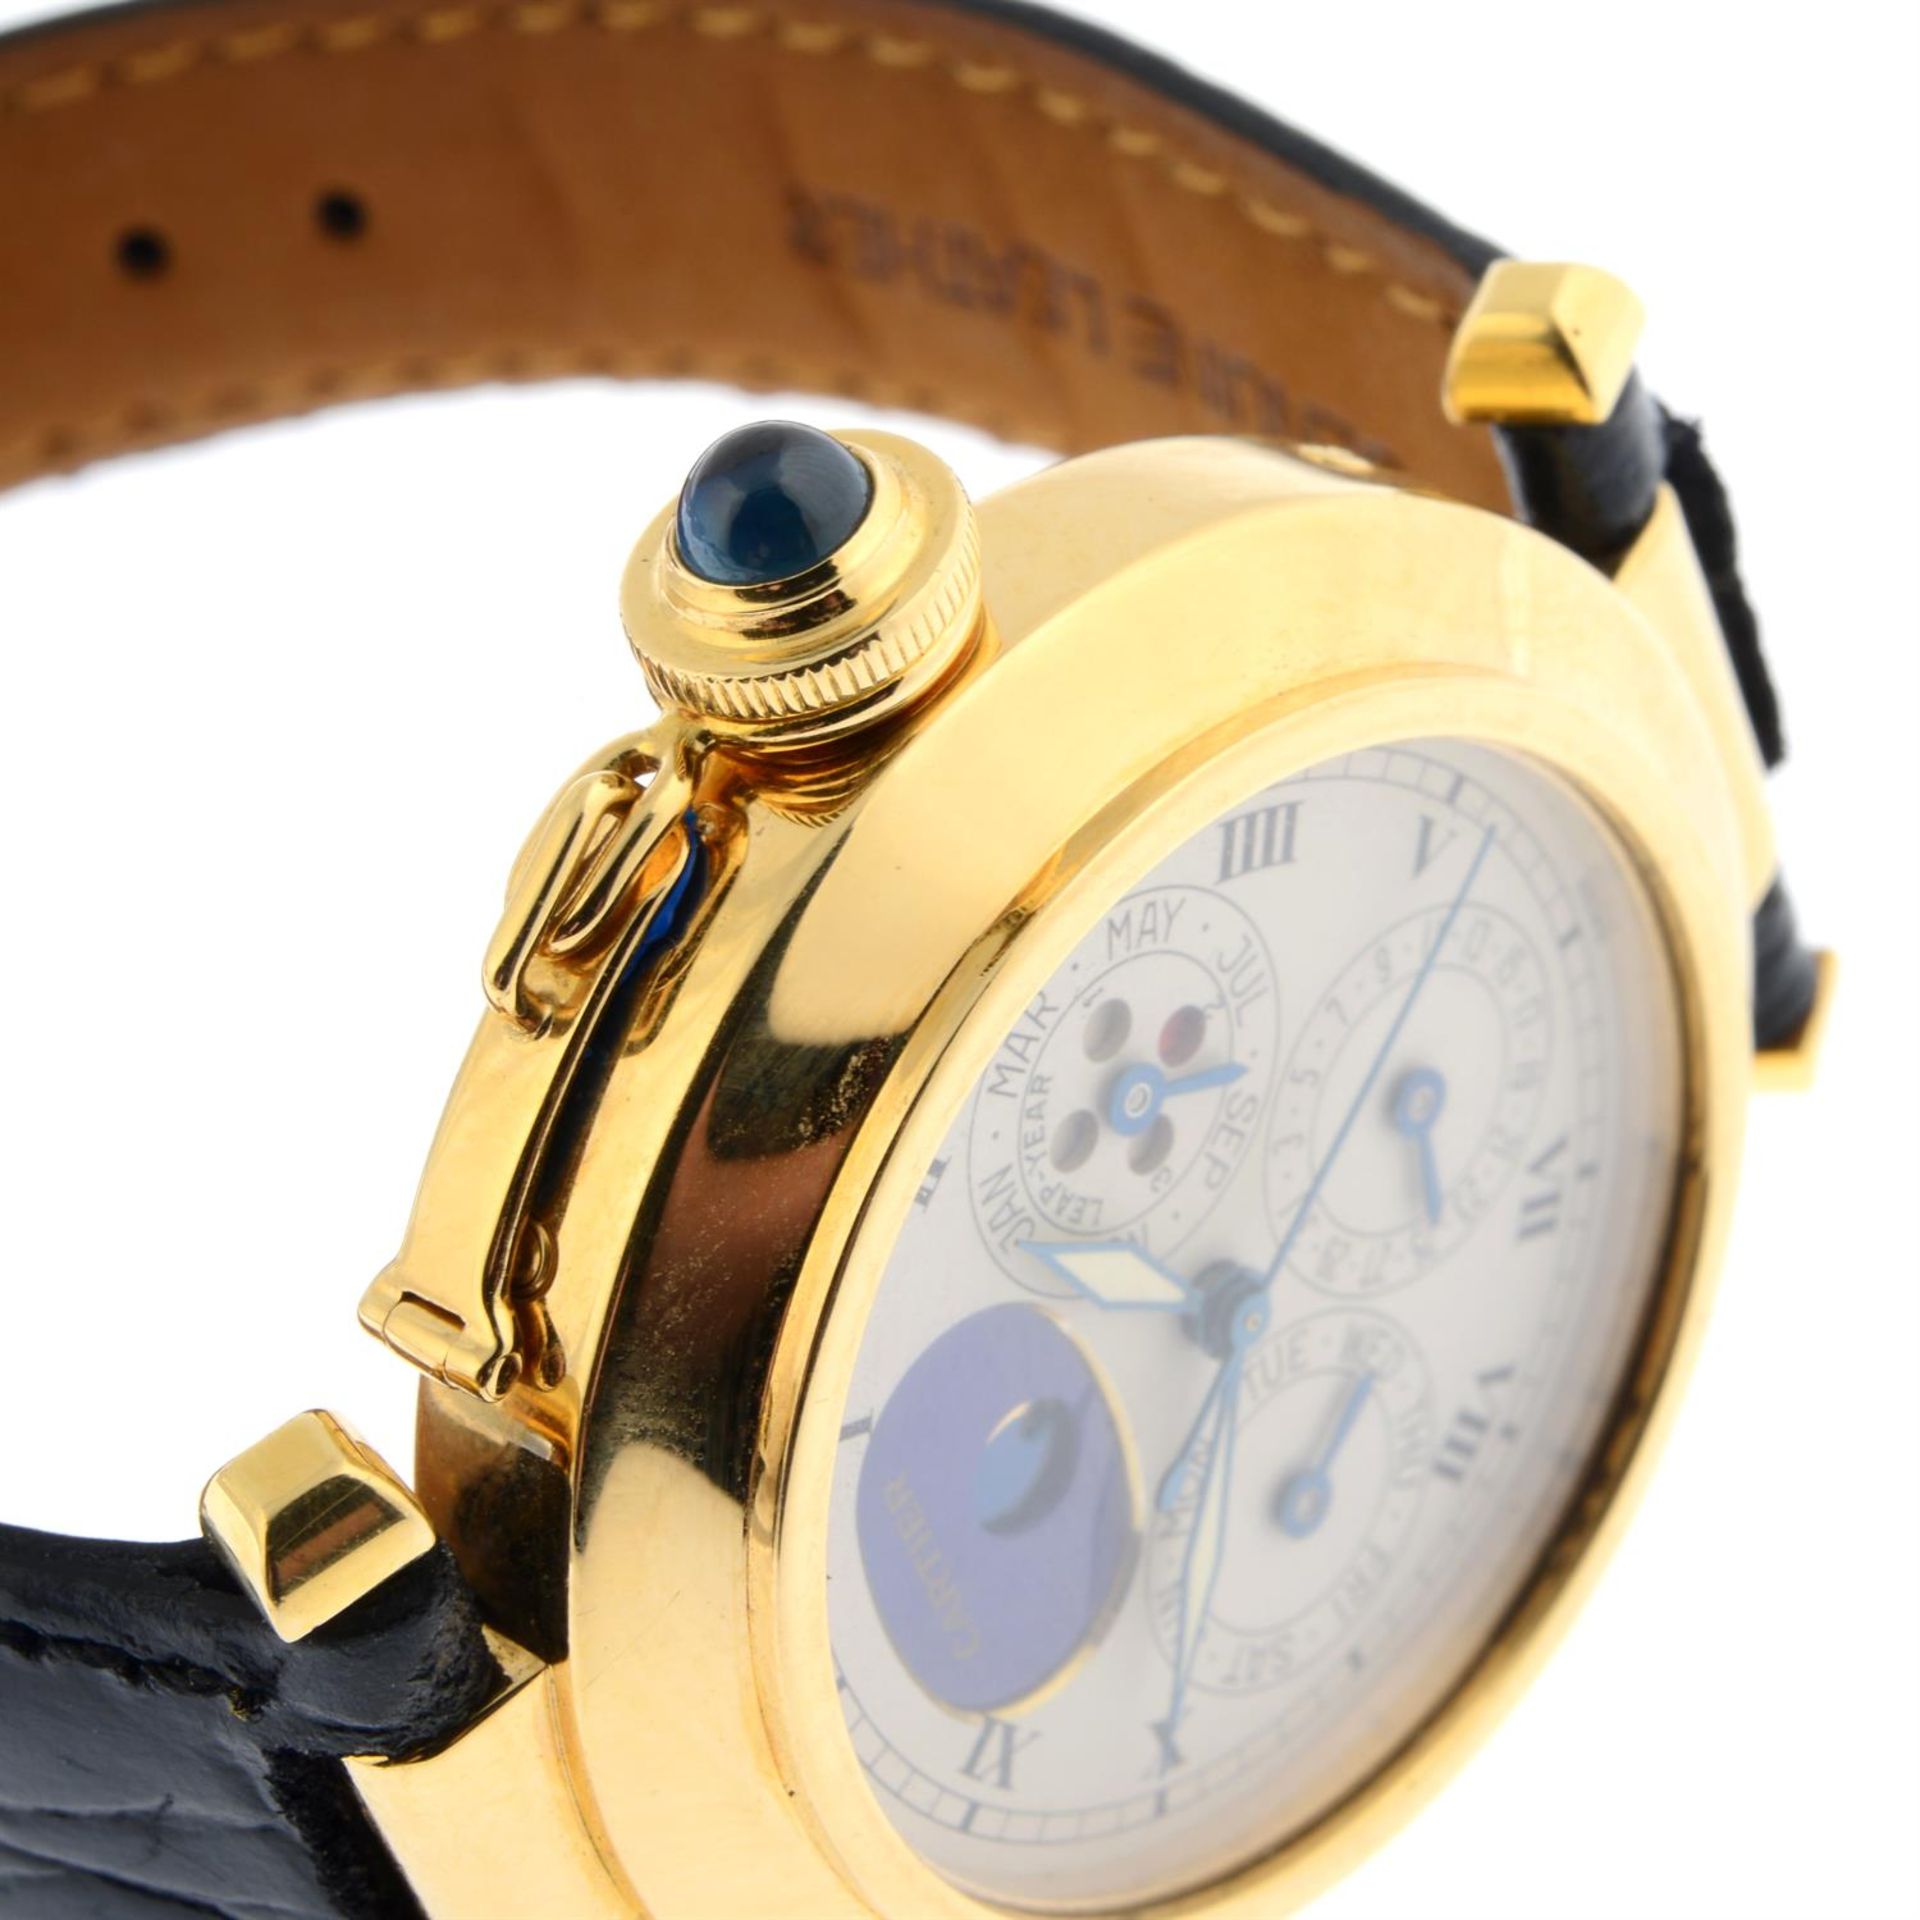 CARTIER - an 18ct yellow gold Pasha Perpetual Calendar wrist watch, 38mm. - Image 4 of 5